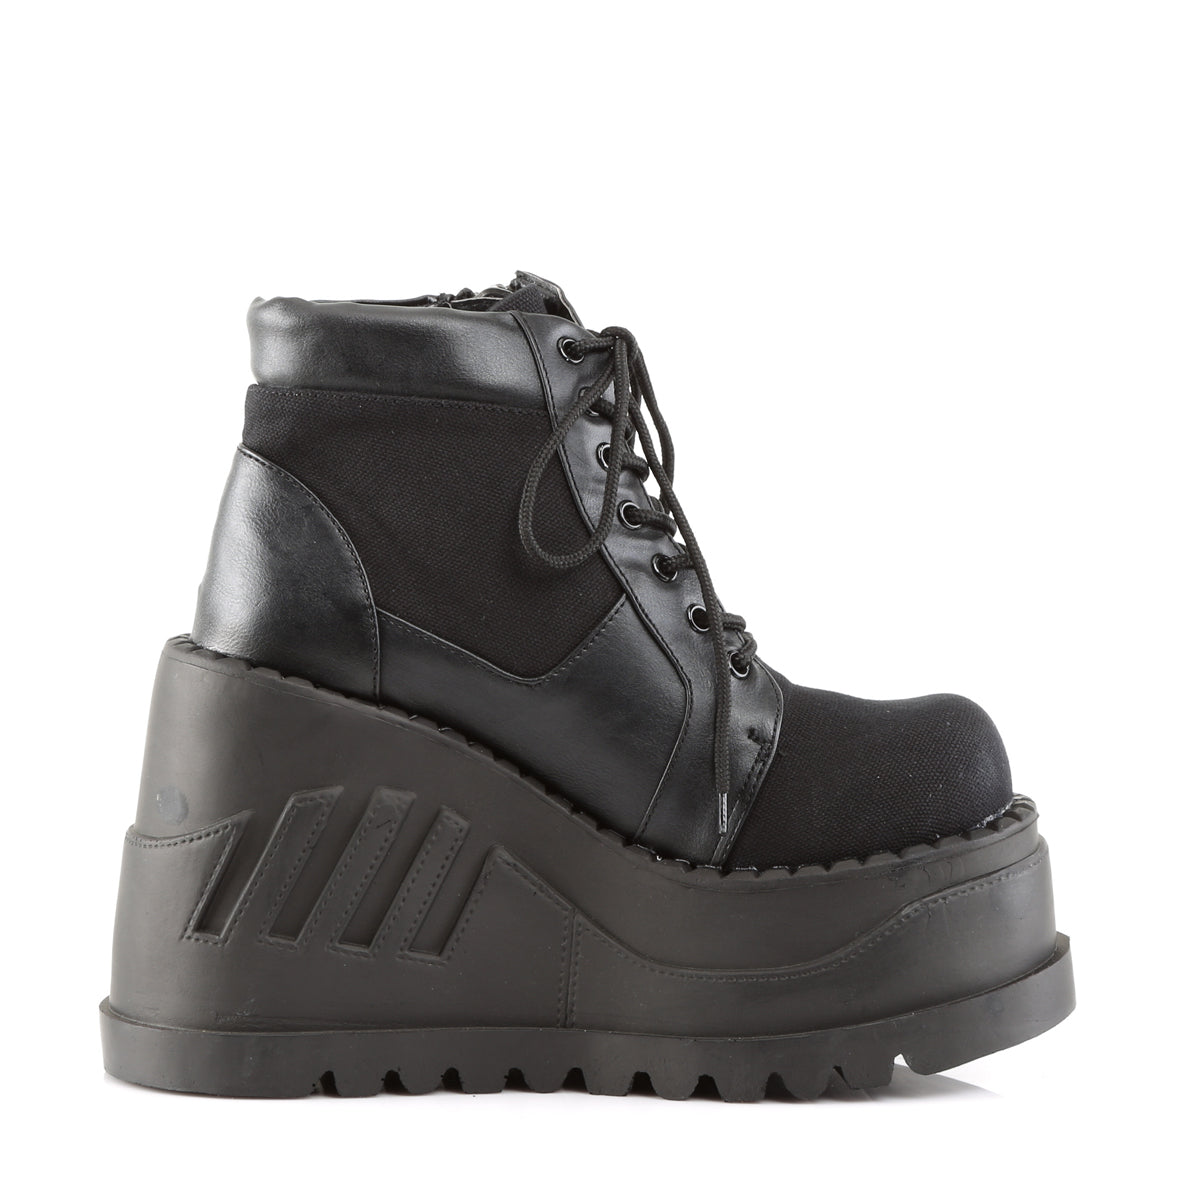 DEMONIA Stomp-10 Black Canvas Vegan Leather Goth Platforms Ankle Boots Booties - A Shoe Addiction Australia